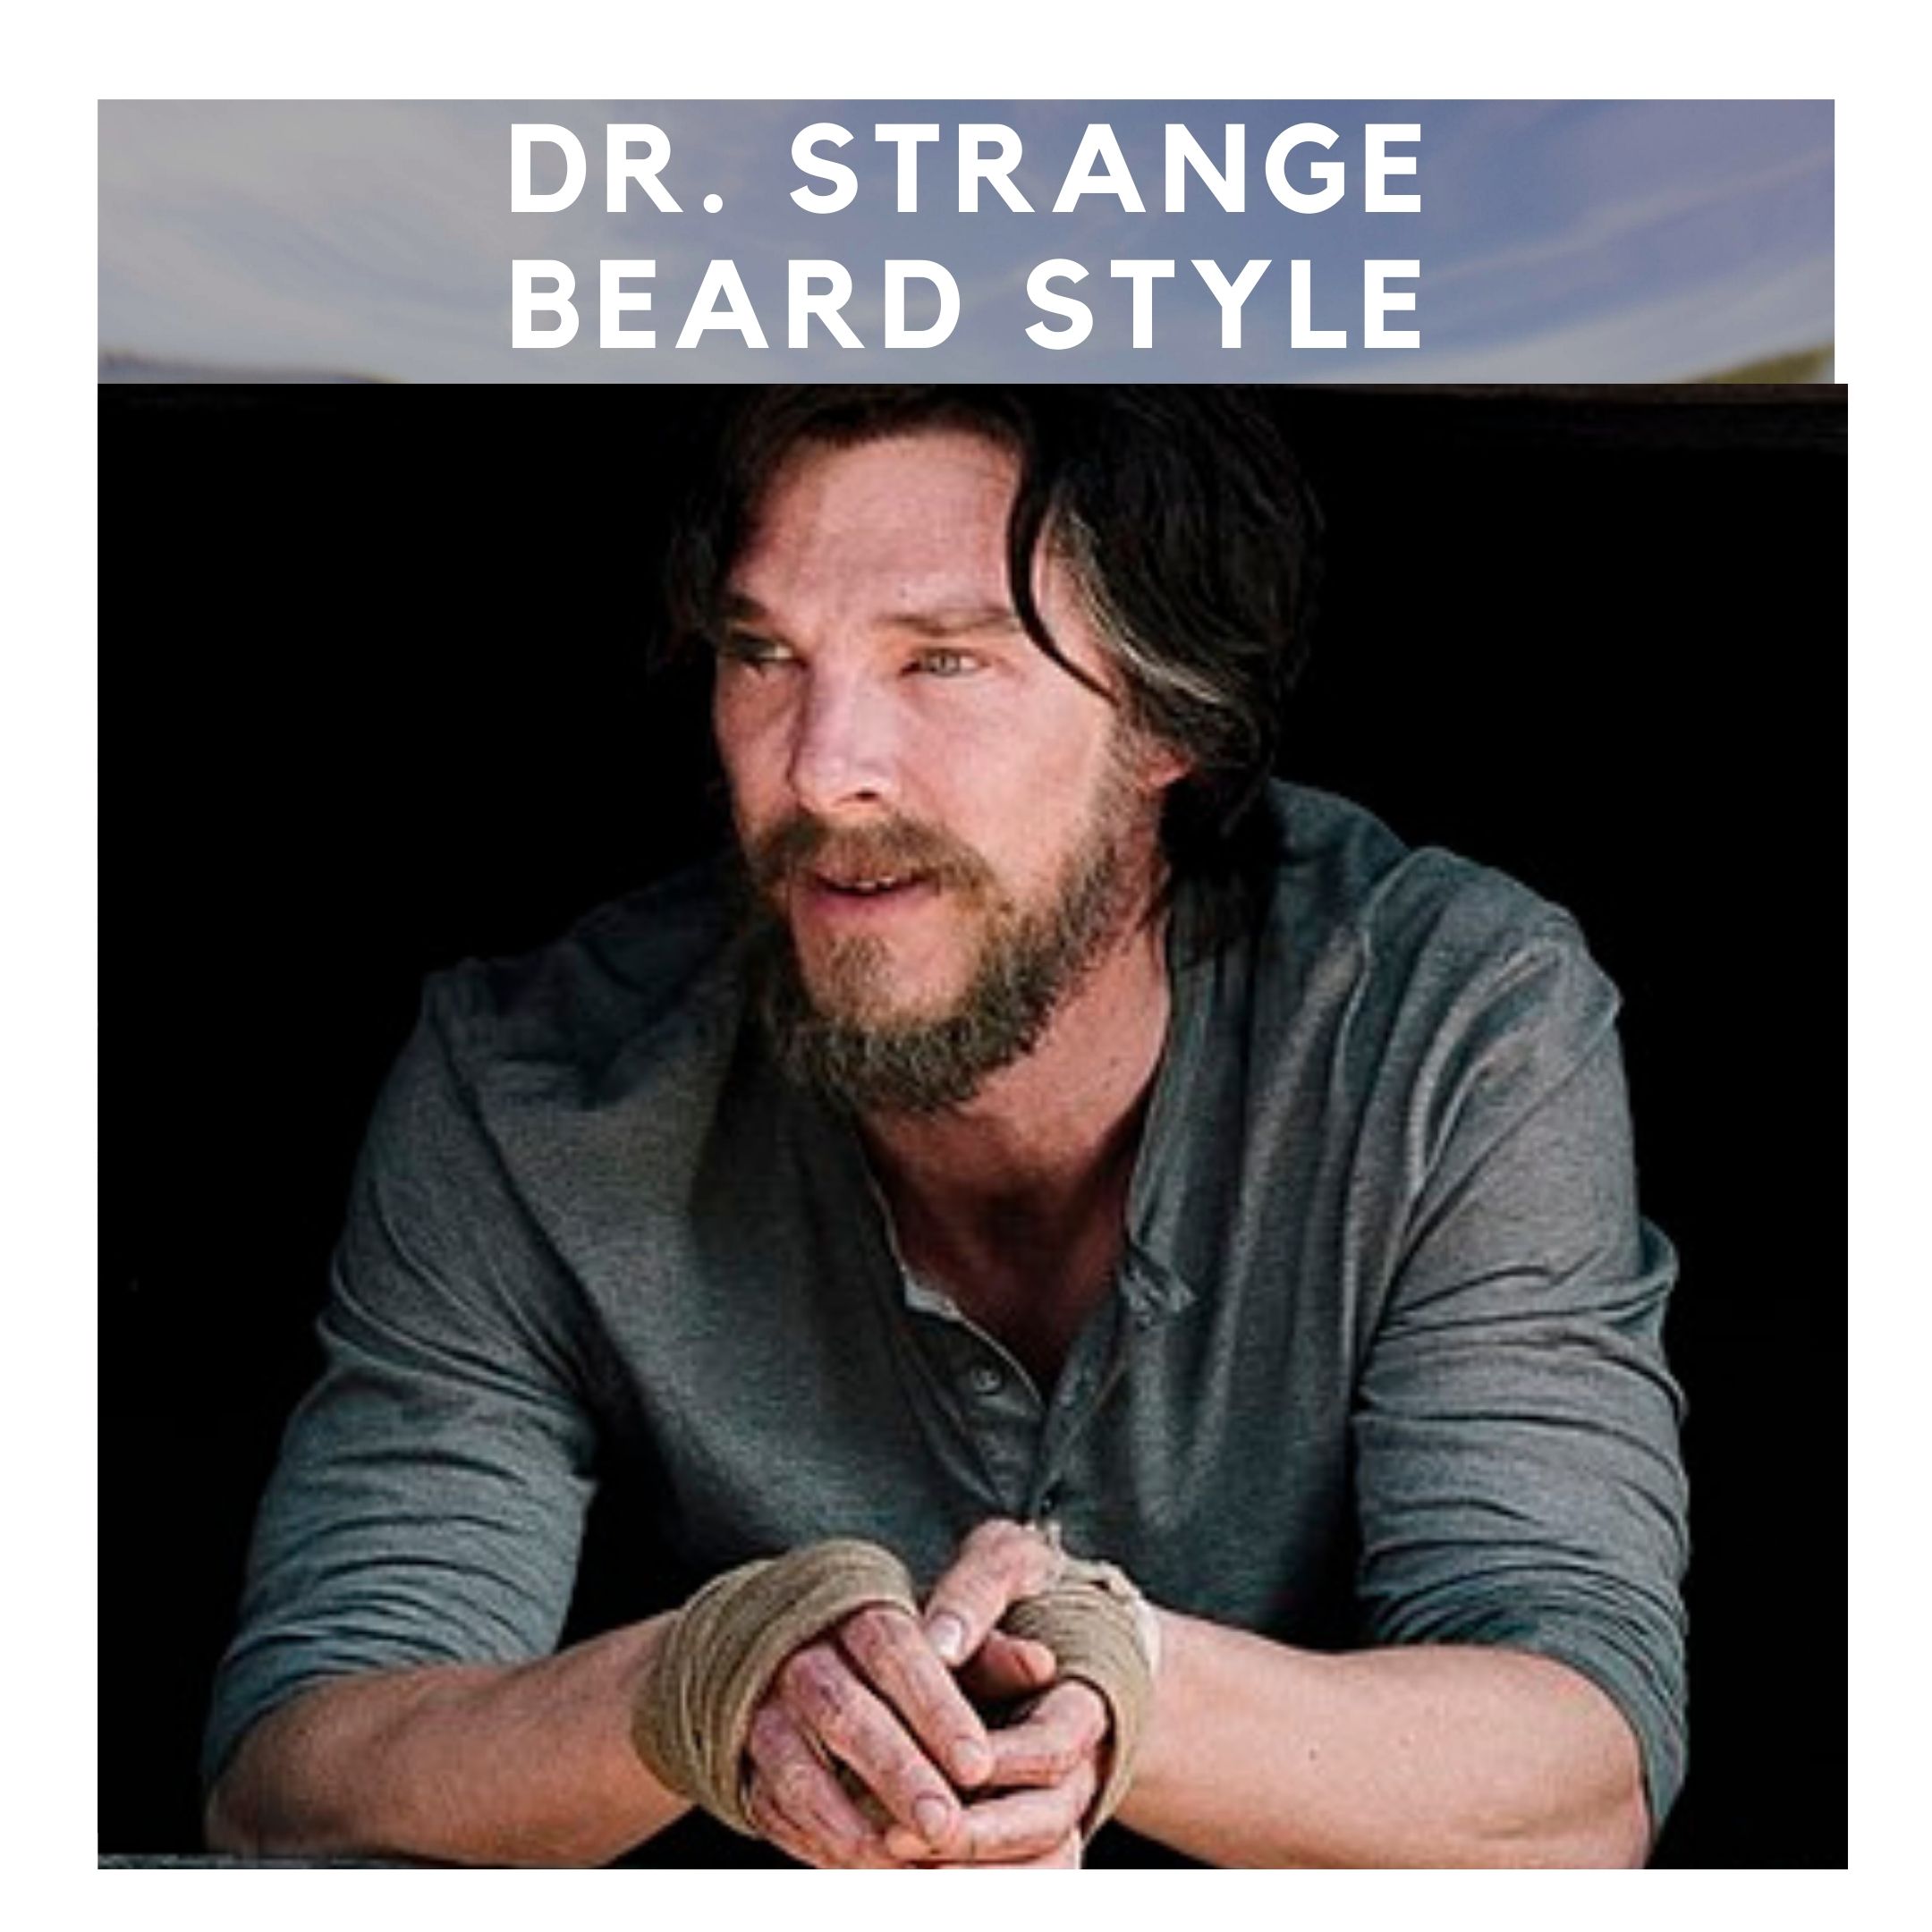 Dr Strange beard style